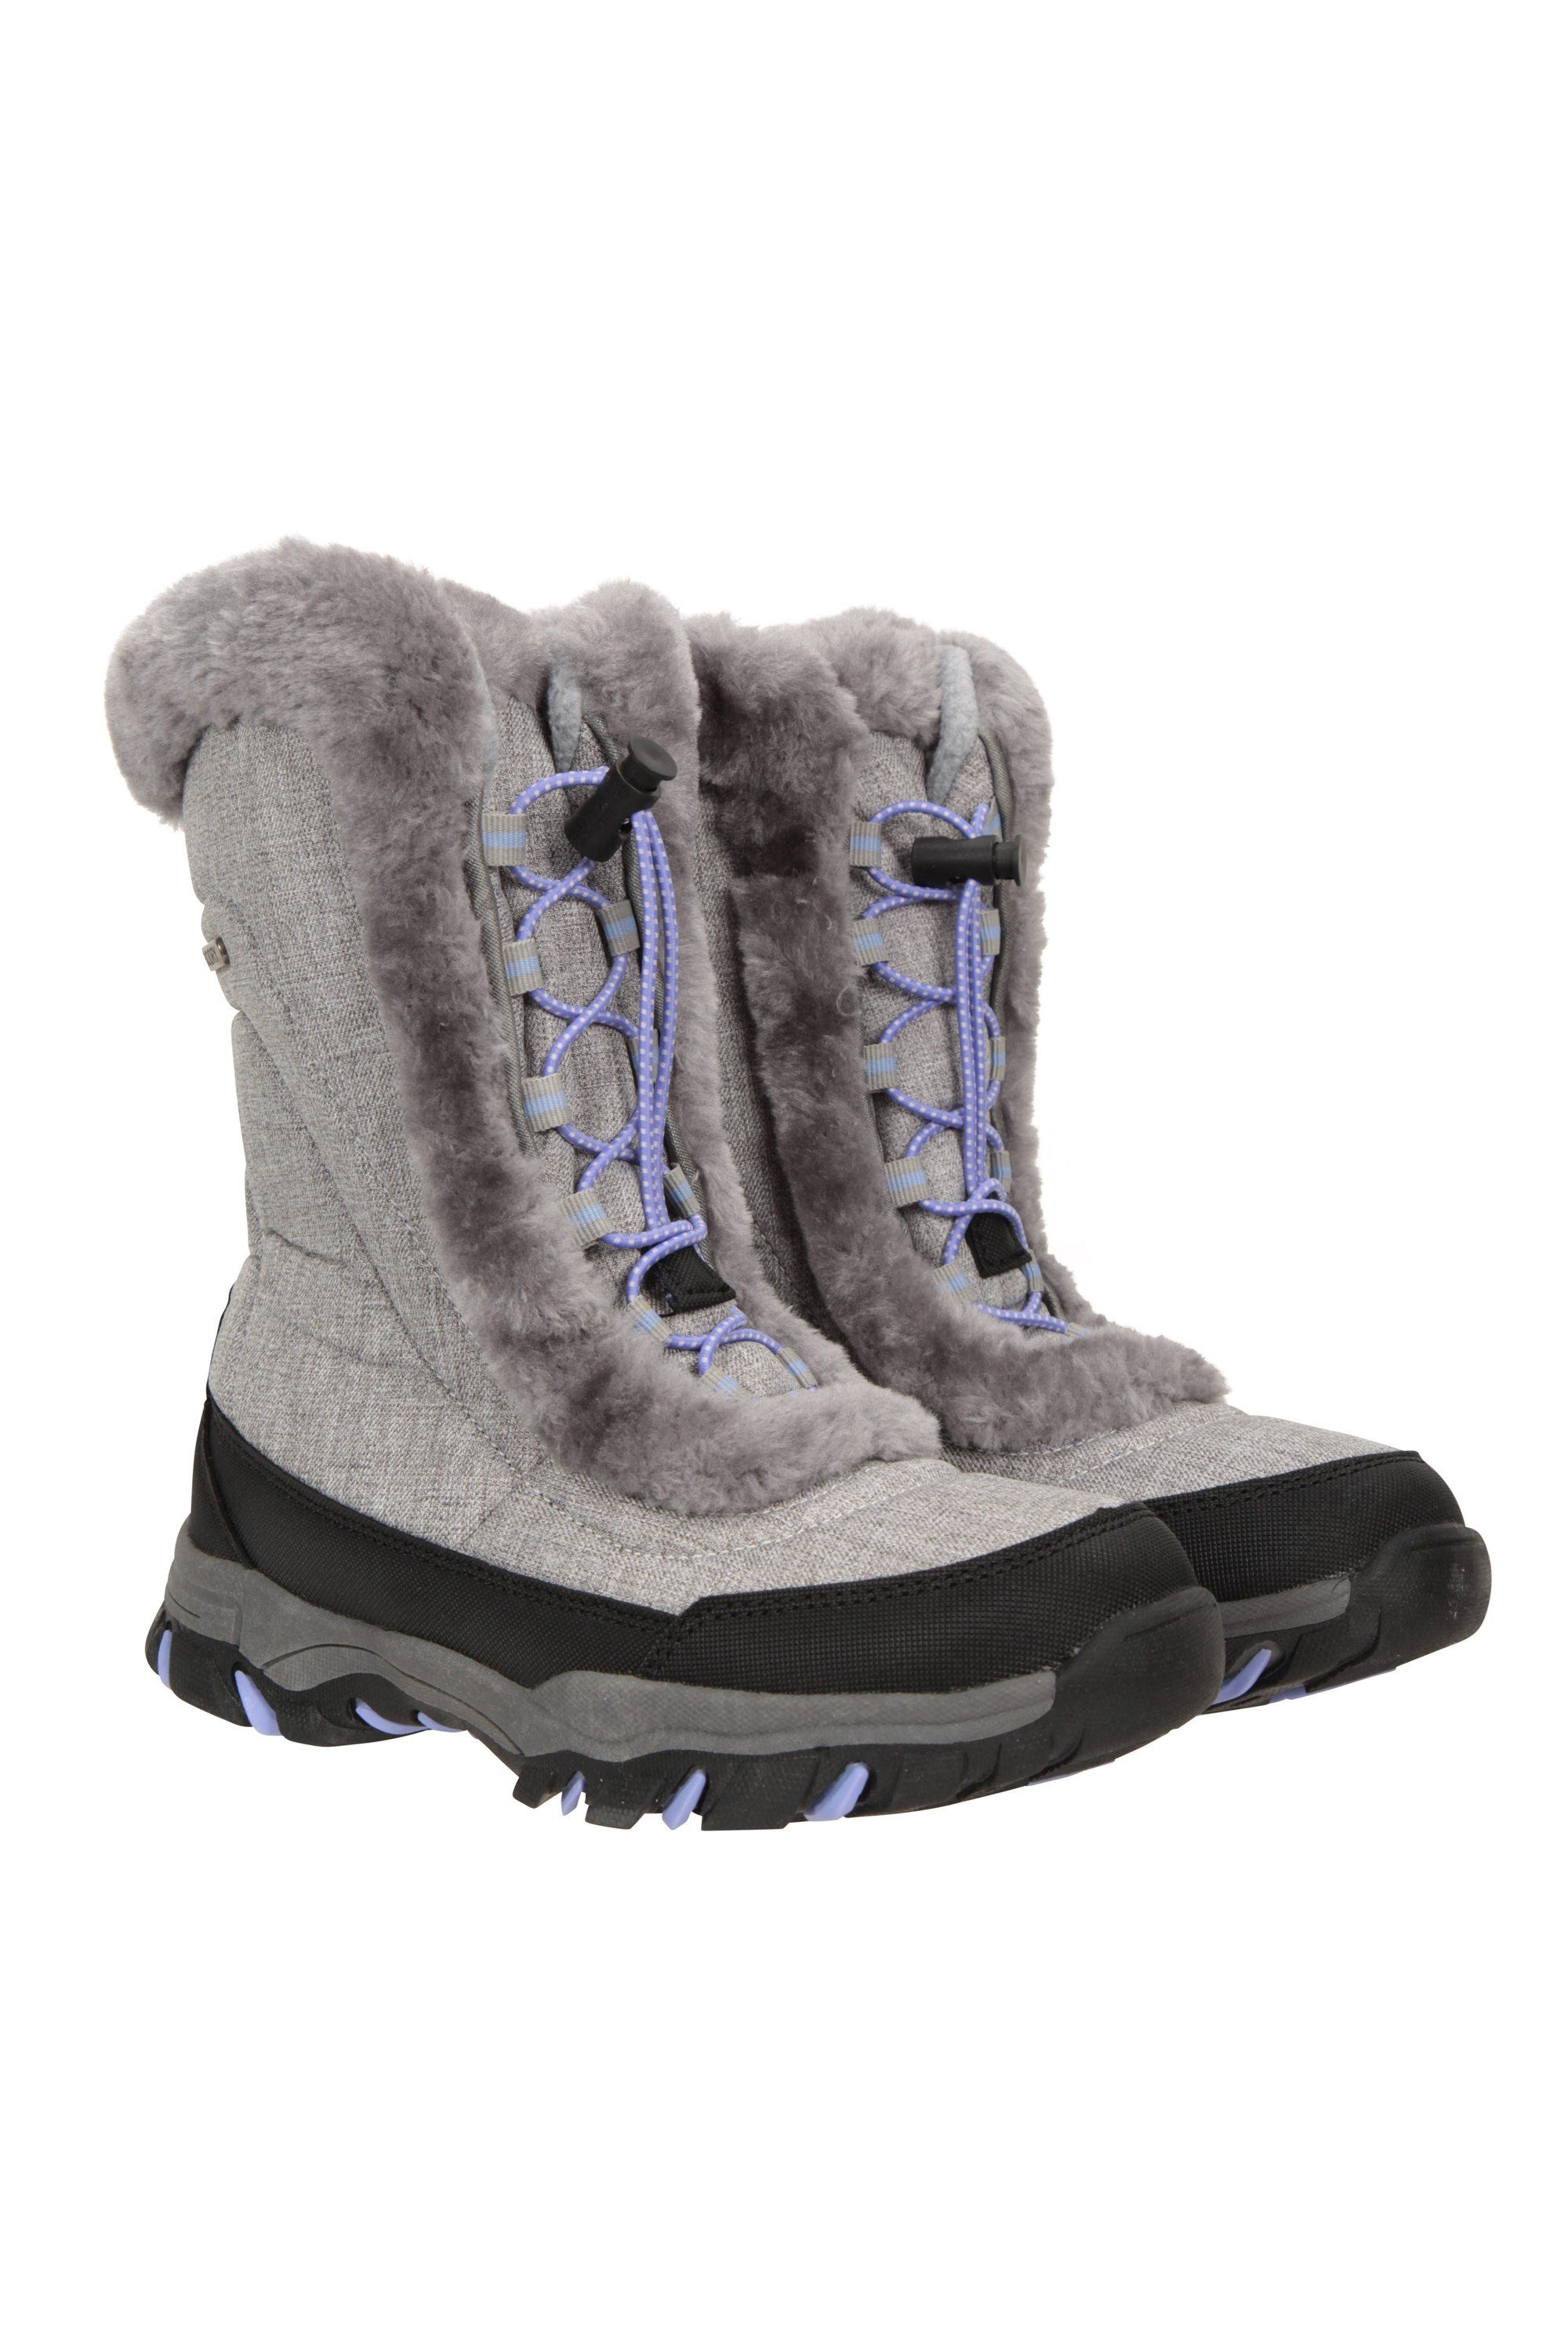 Ohio Youth Snow Boots - Grey